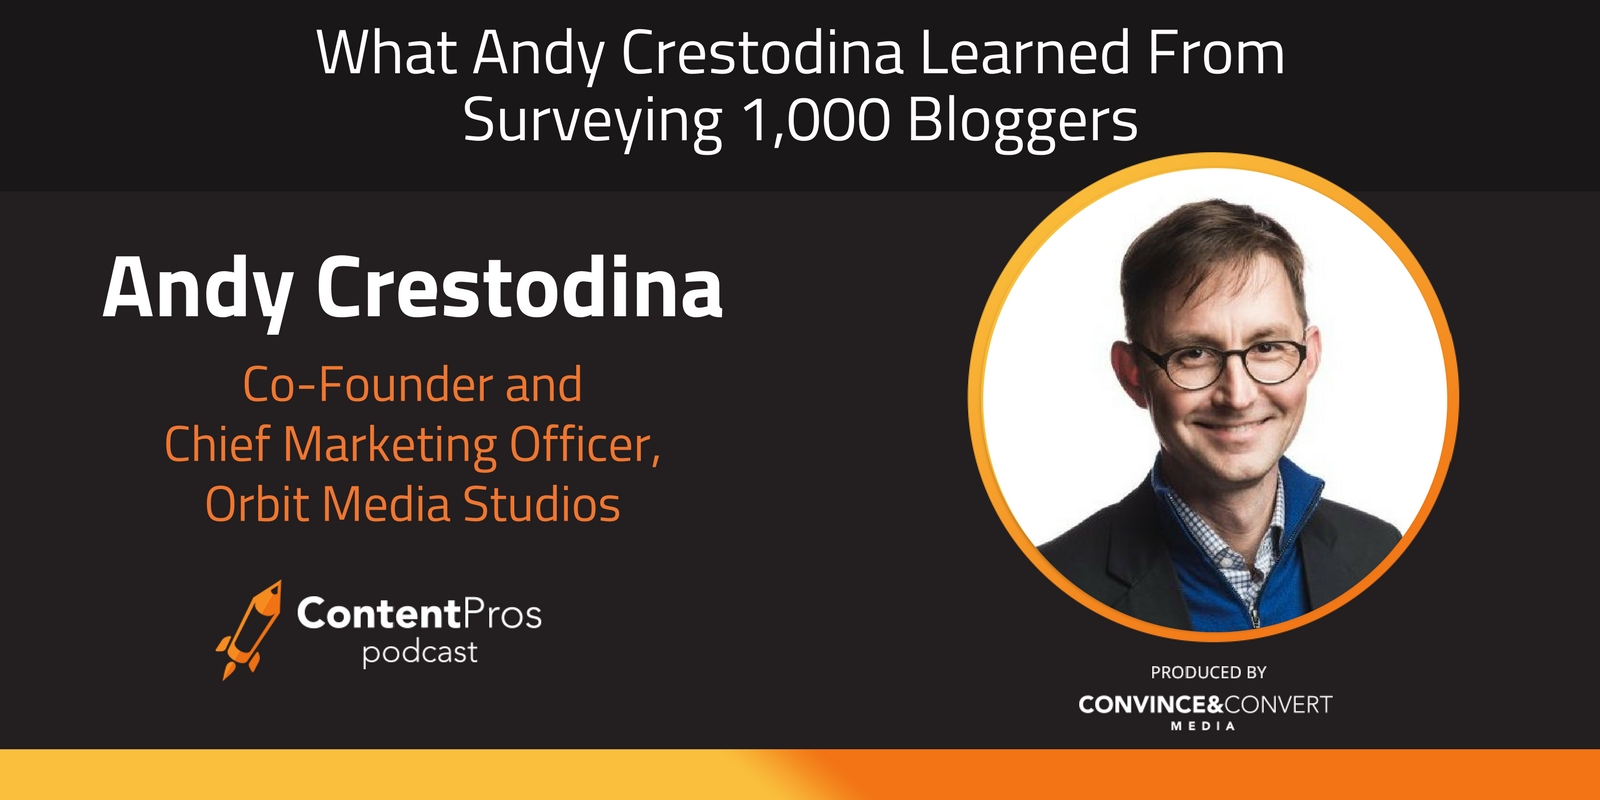 Andy Crestodina